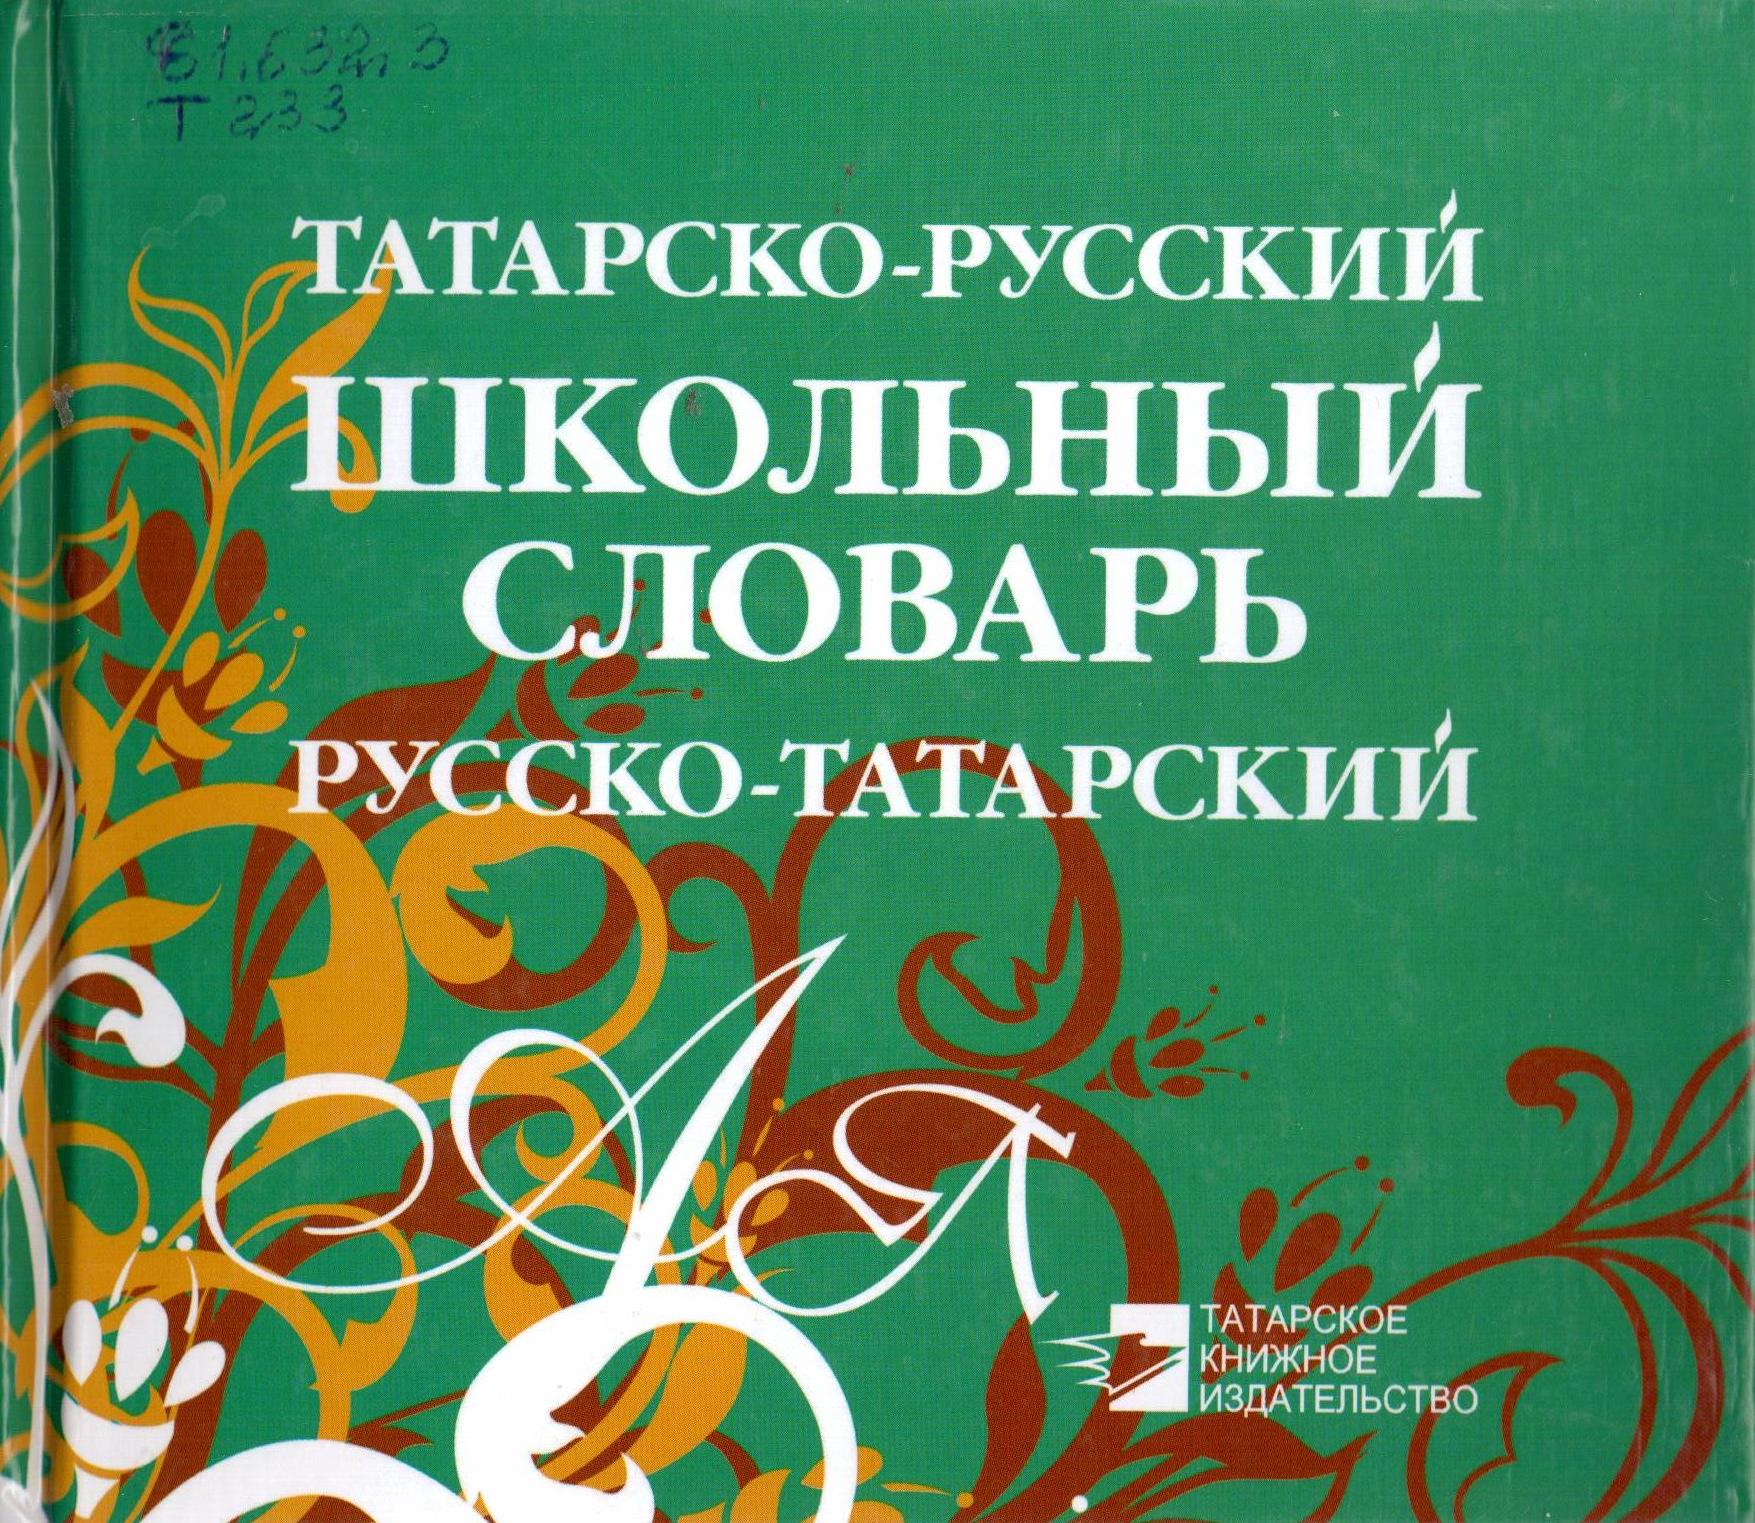 Словарик на татарском языке